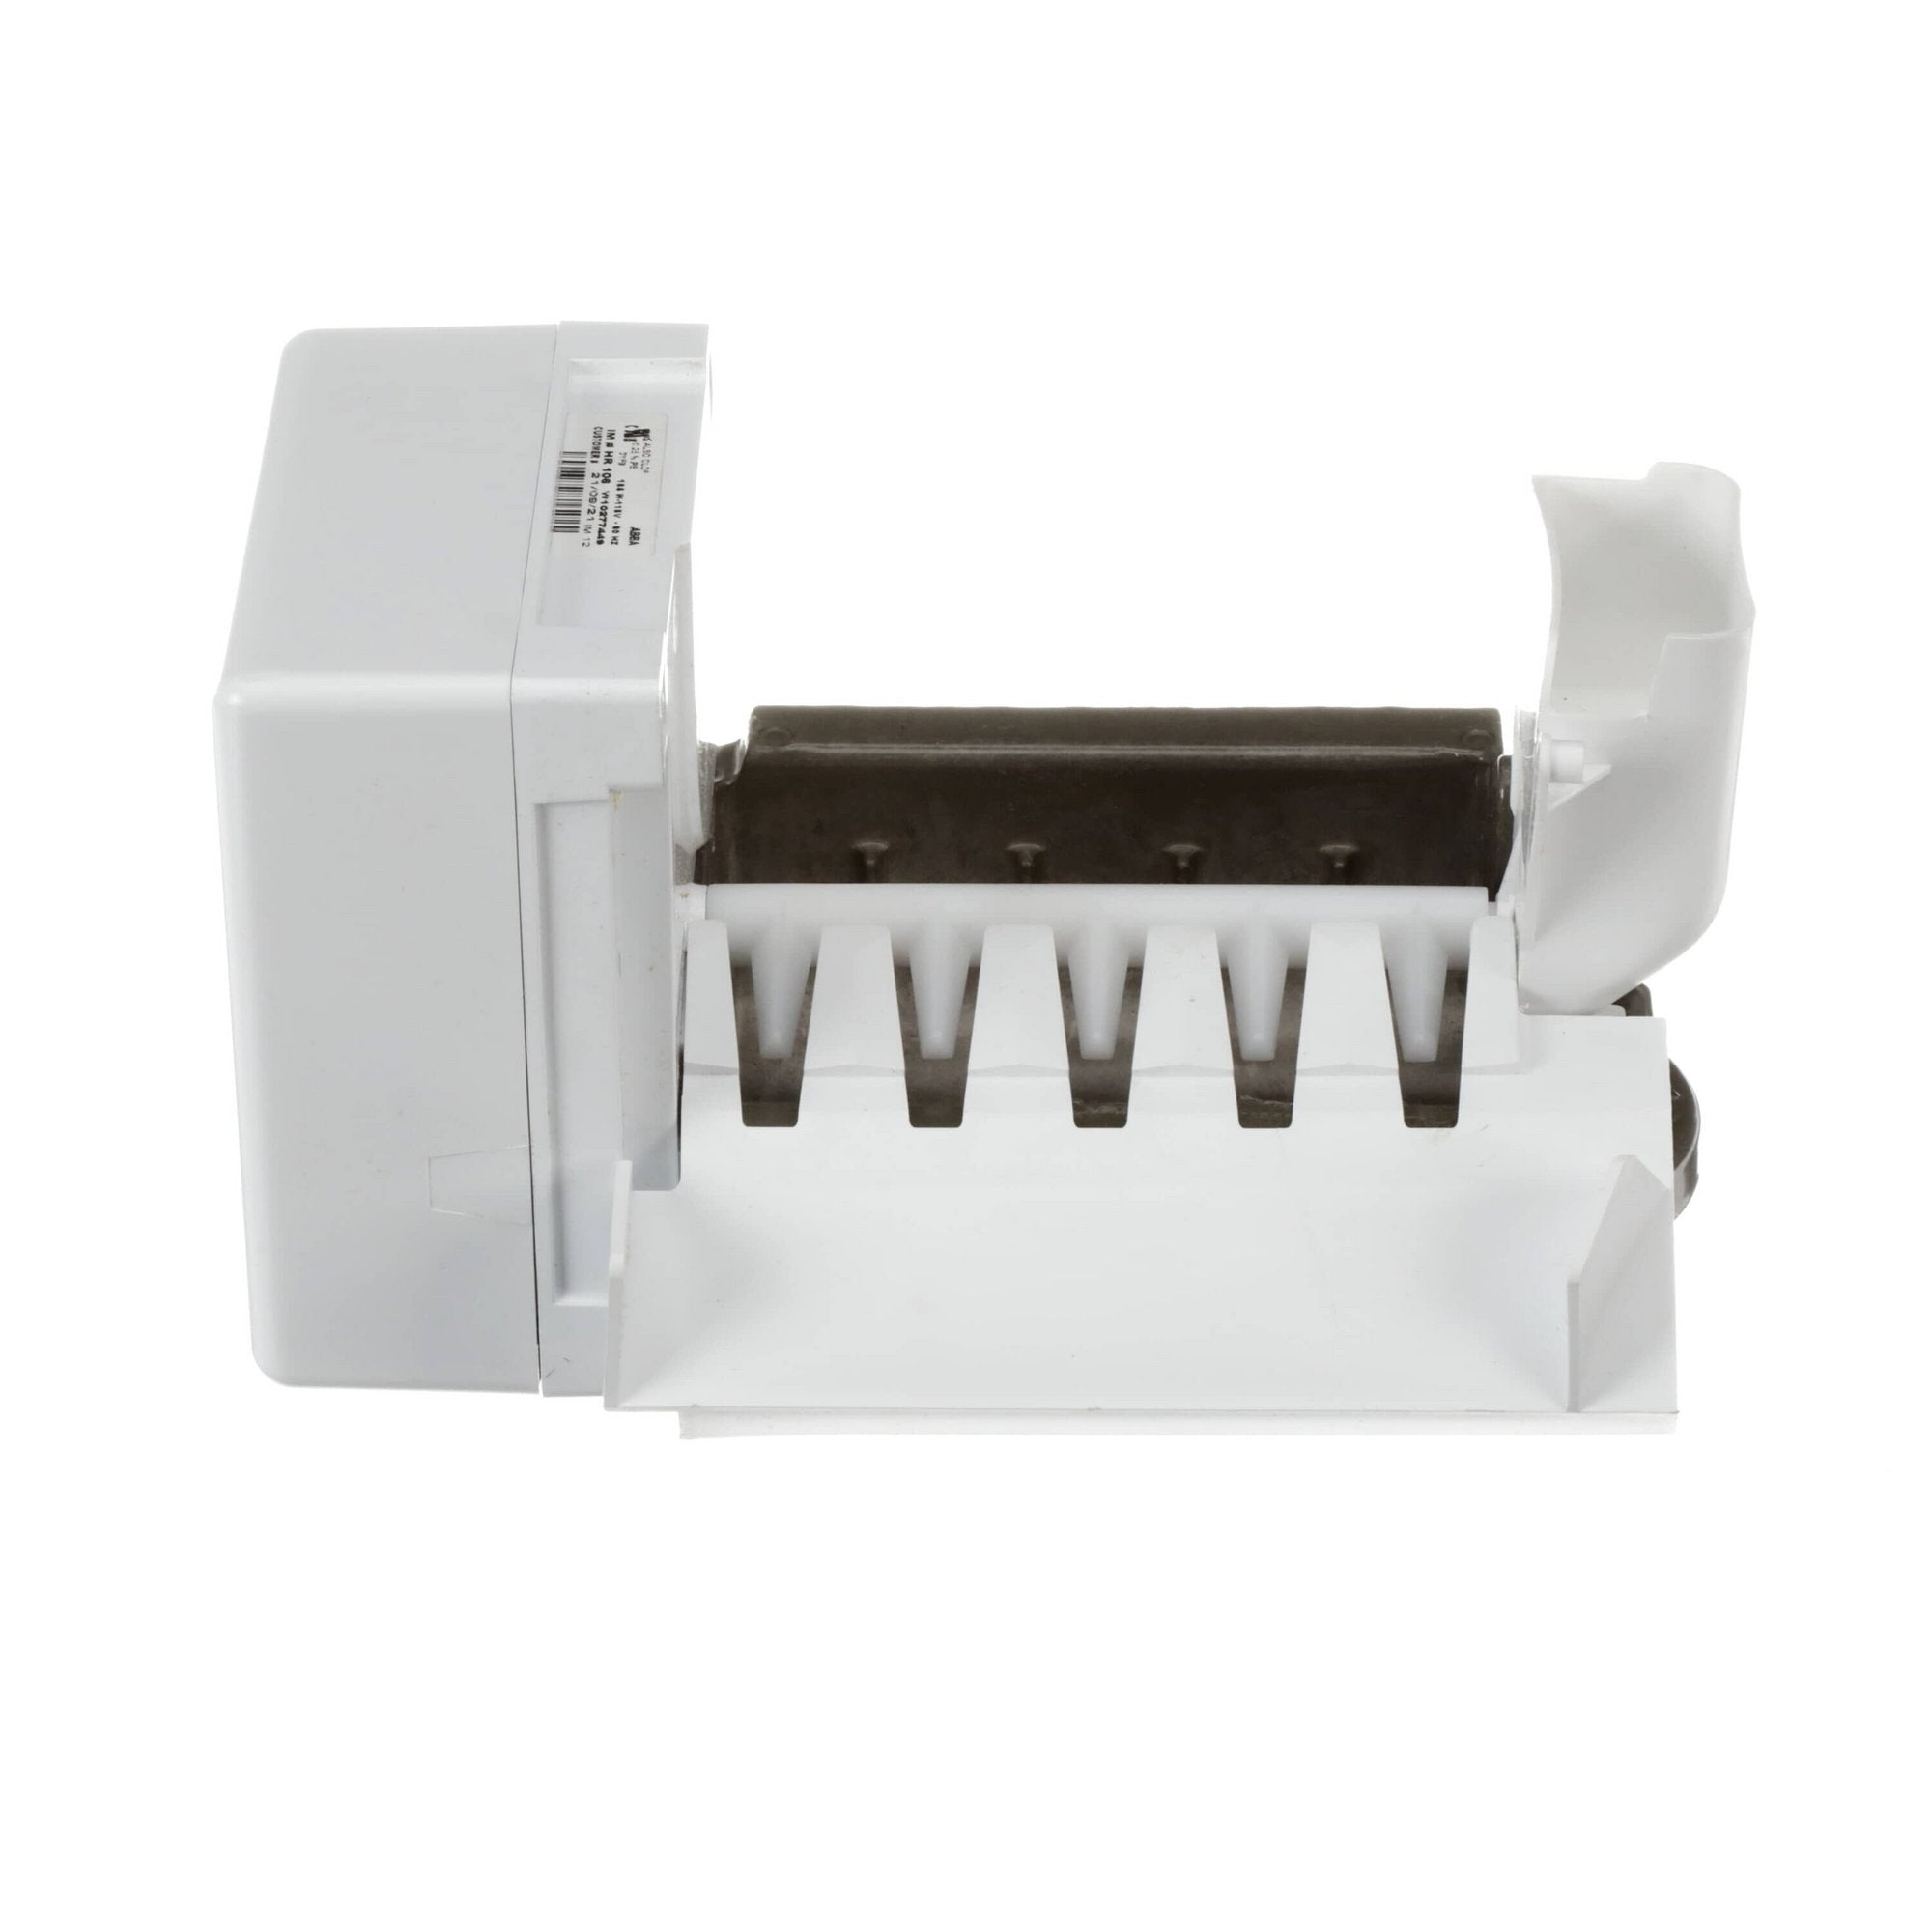 WPW10277449 - Whirlpool Refrigerator Ice Maker New